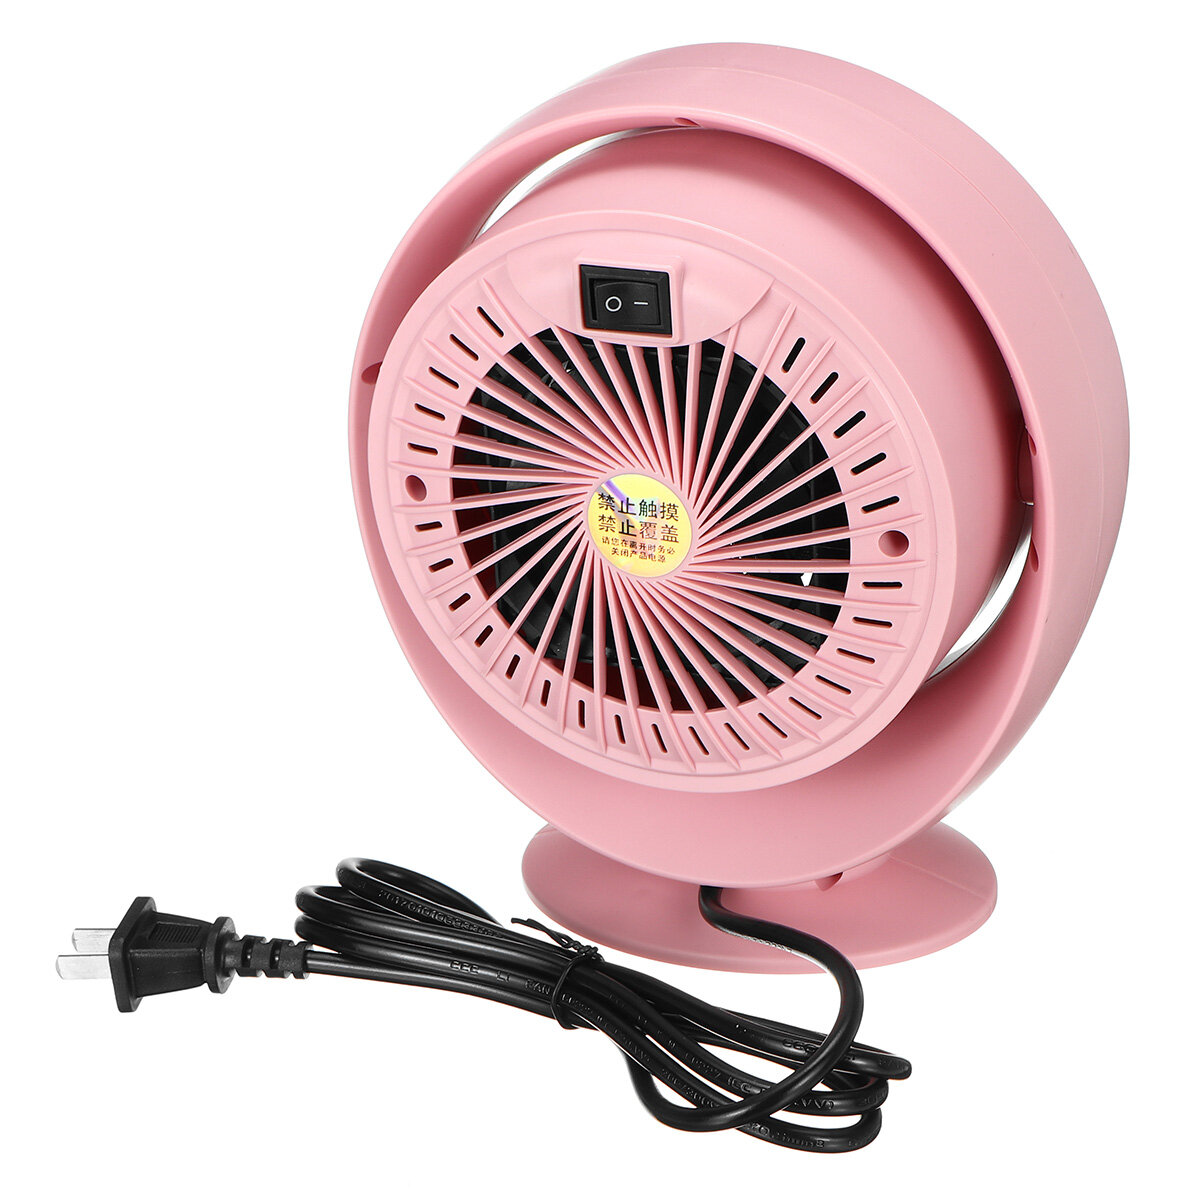 

800W Mini Electric Air Heater Portable Space PTC Ceramic Heating Fan Home Office Winter Warmer